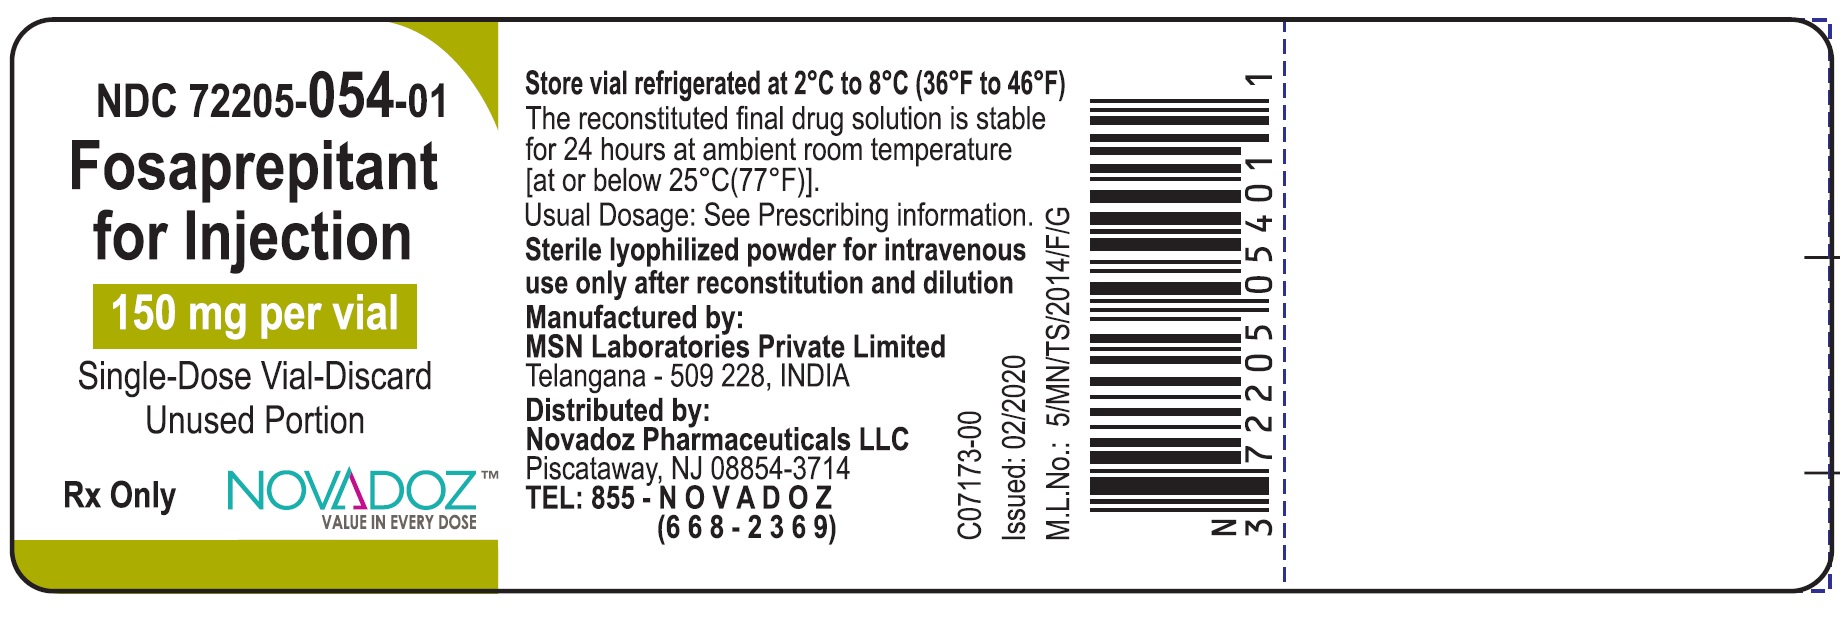 fosaprepitant-vial-label